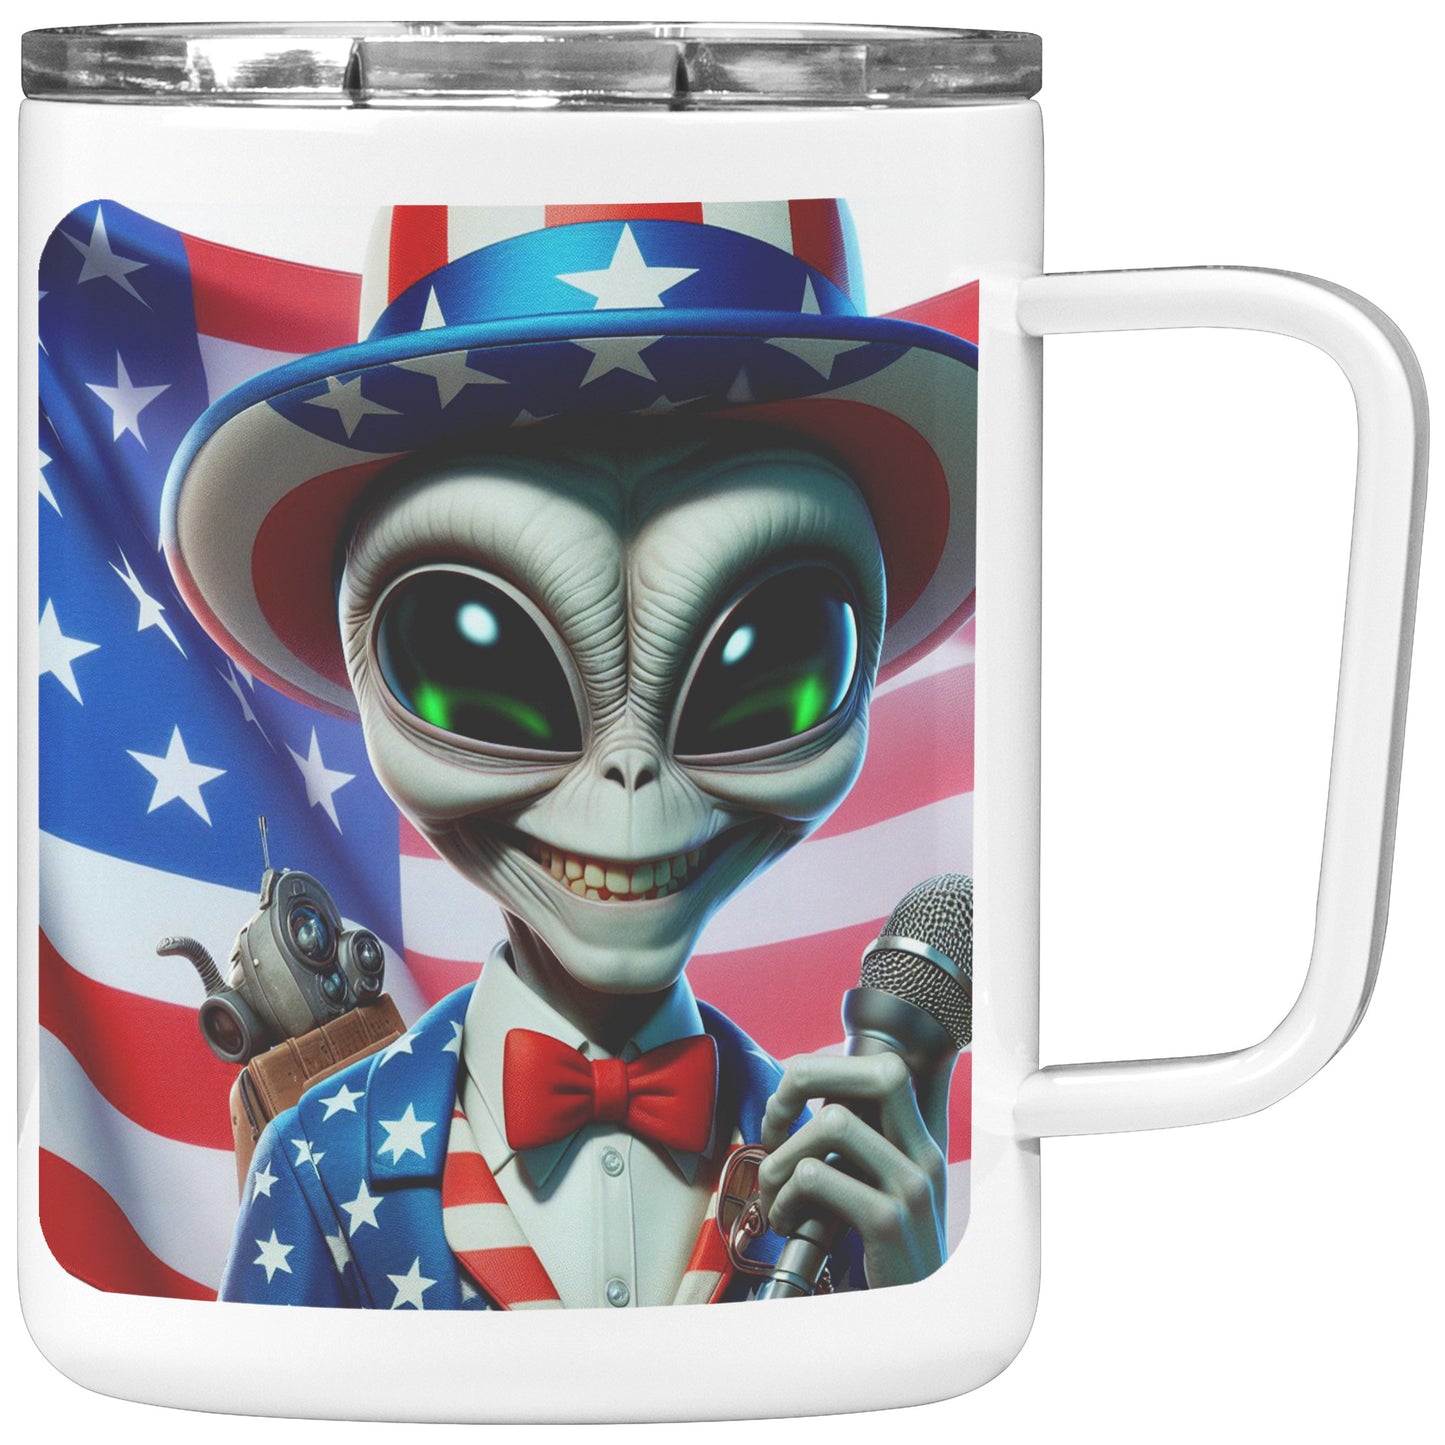 Nebulon the Grey Alien - Insulated Coffee Mug #23